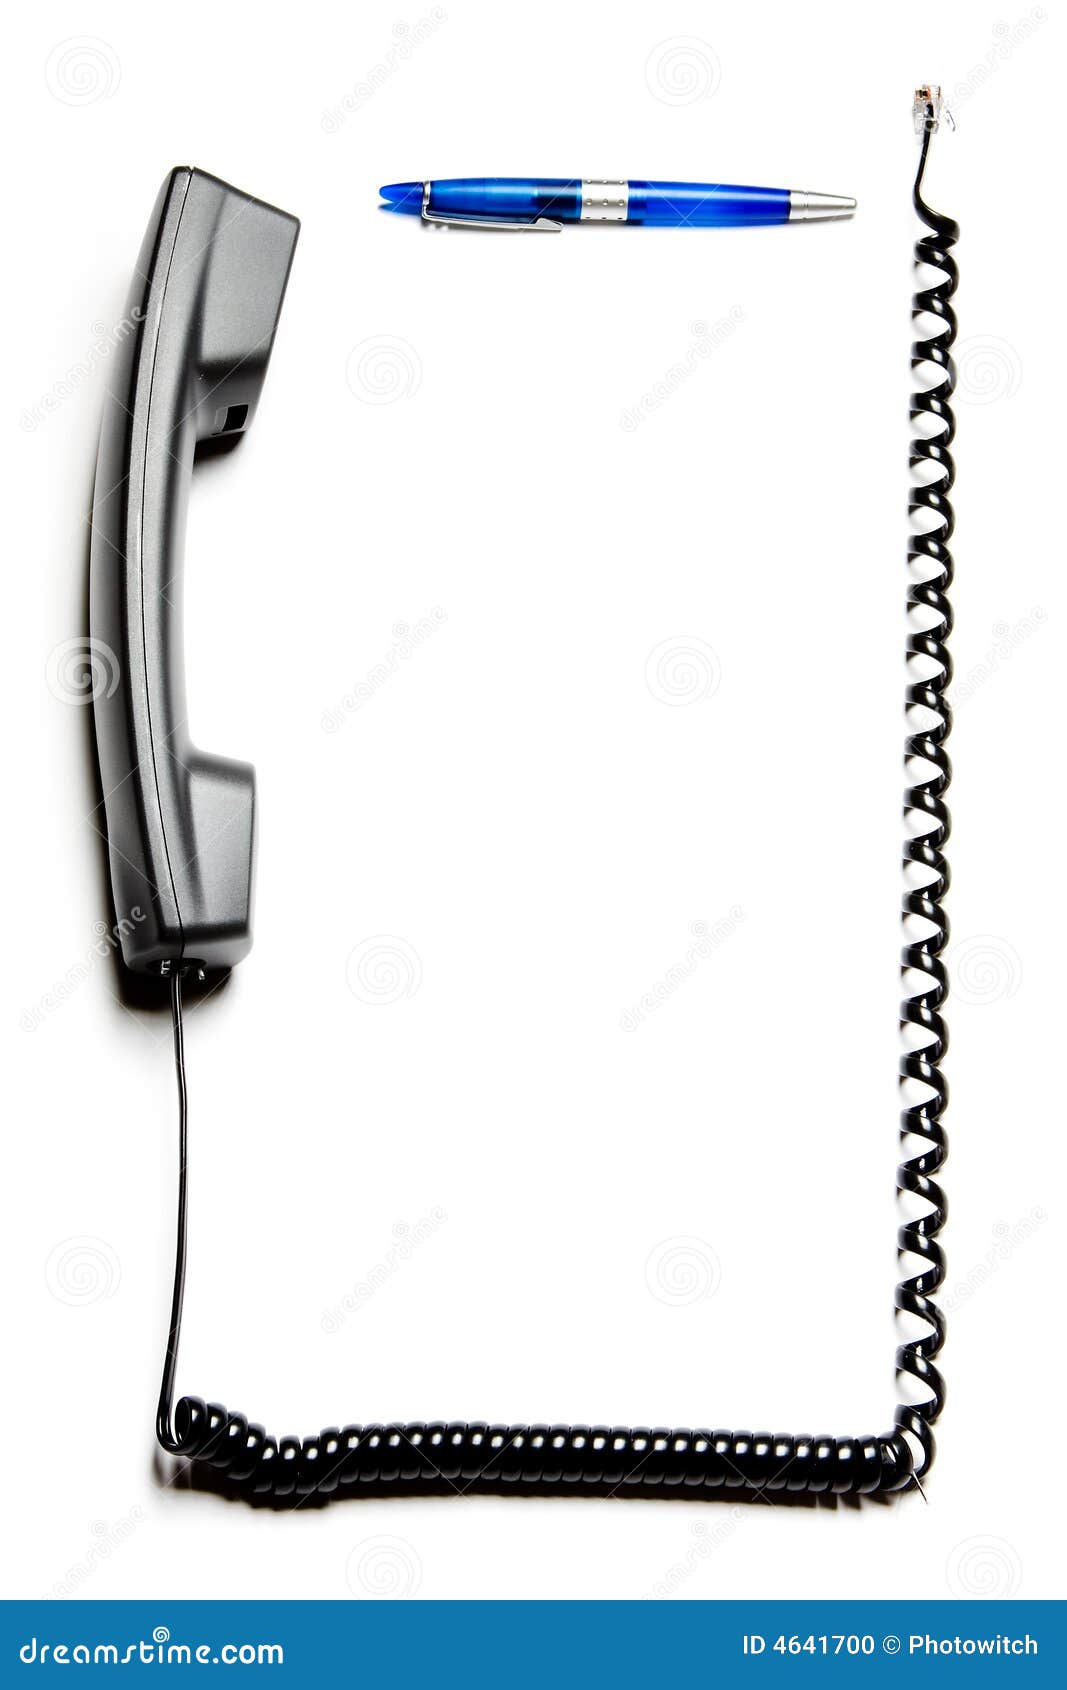 phone cord clip art - photo #21